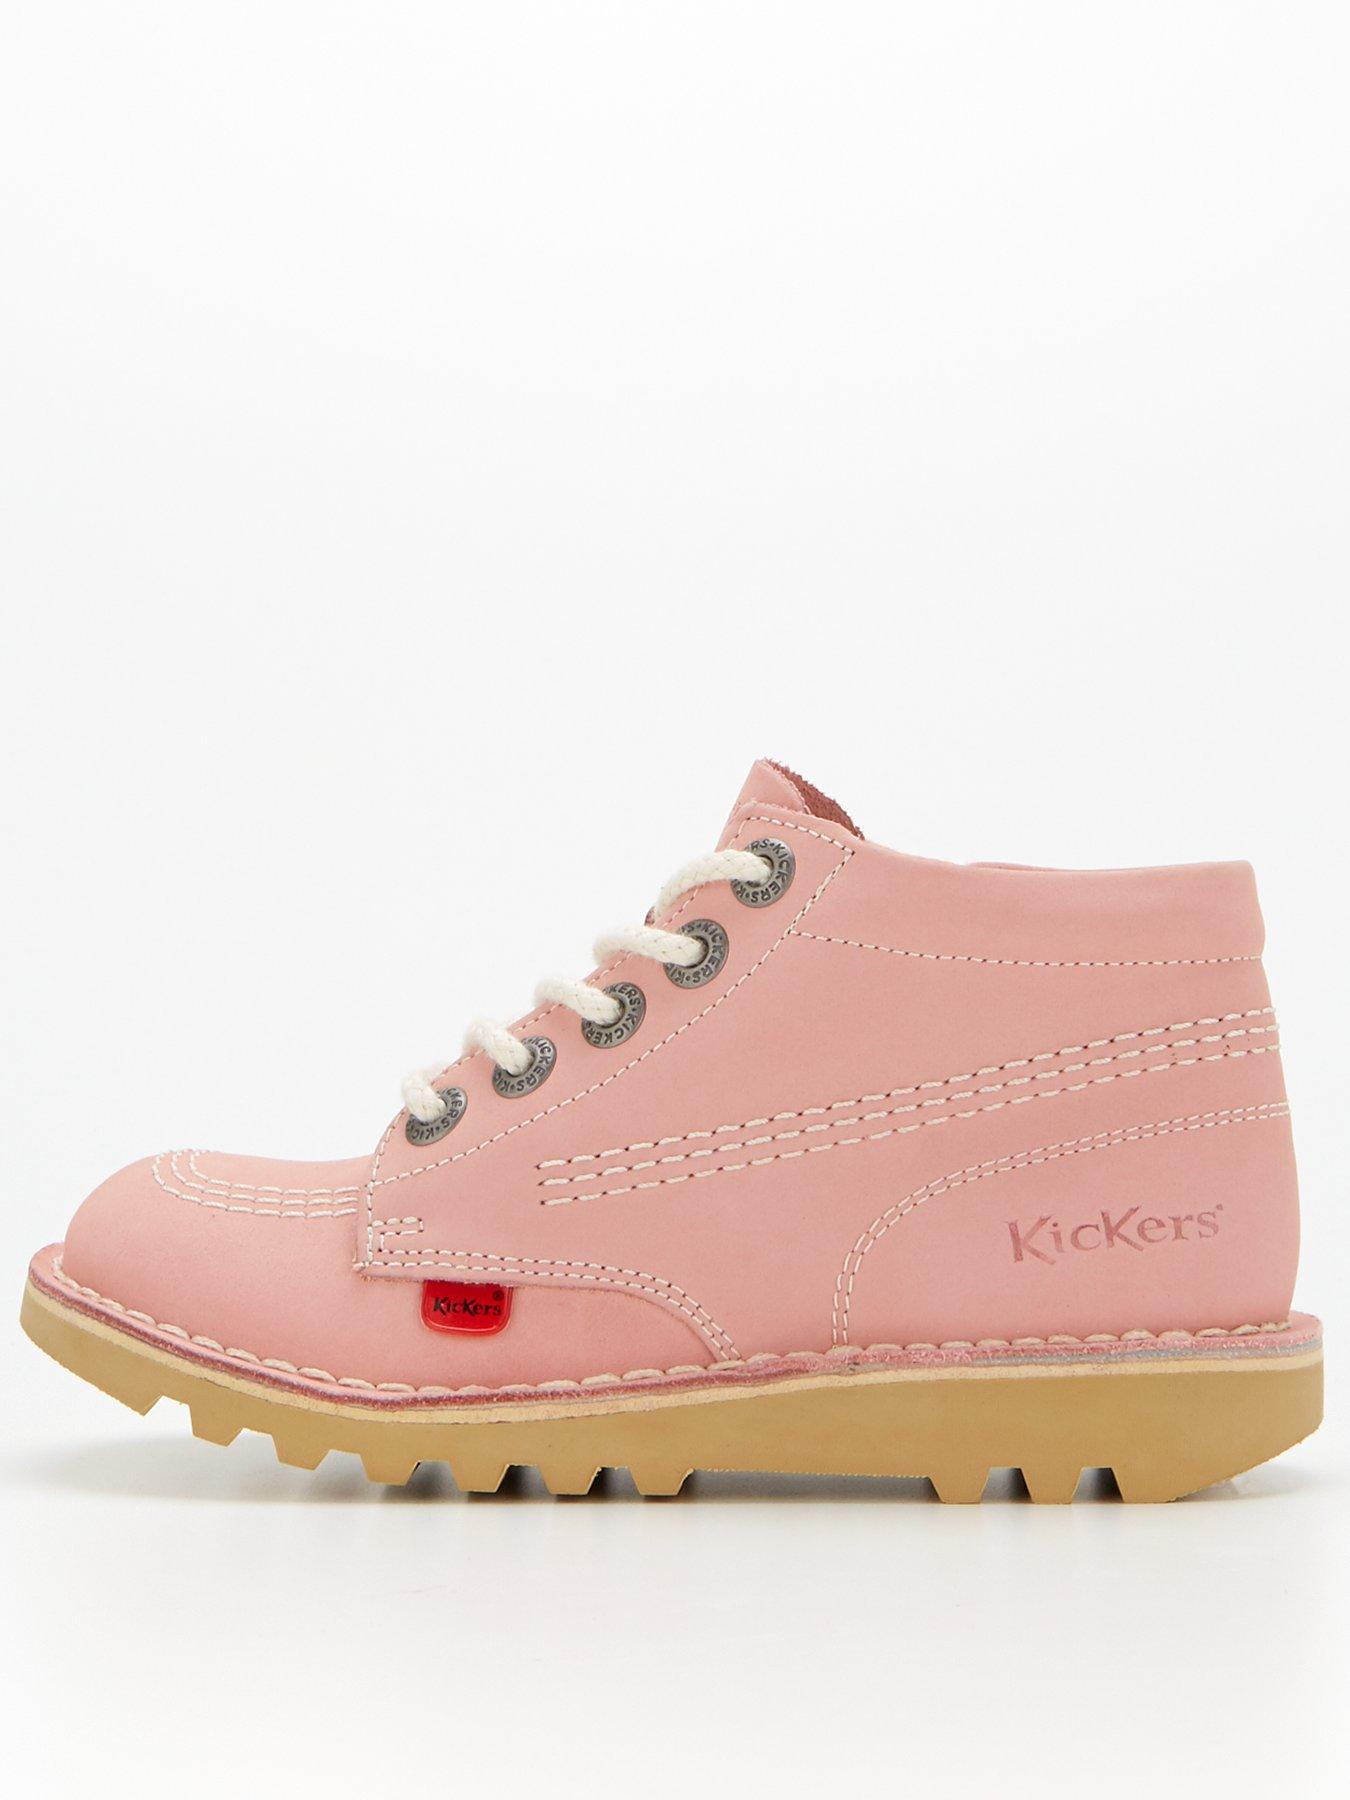 Kids Kick Hi Boot - Pink